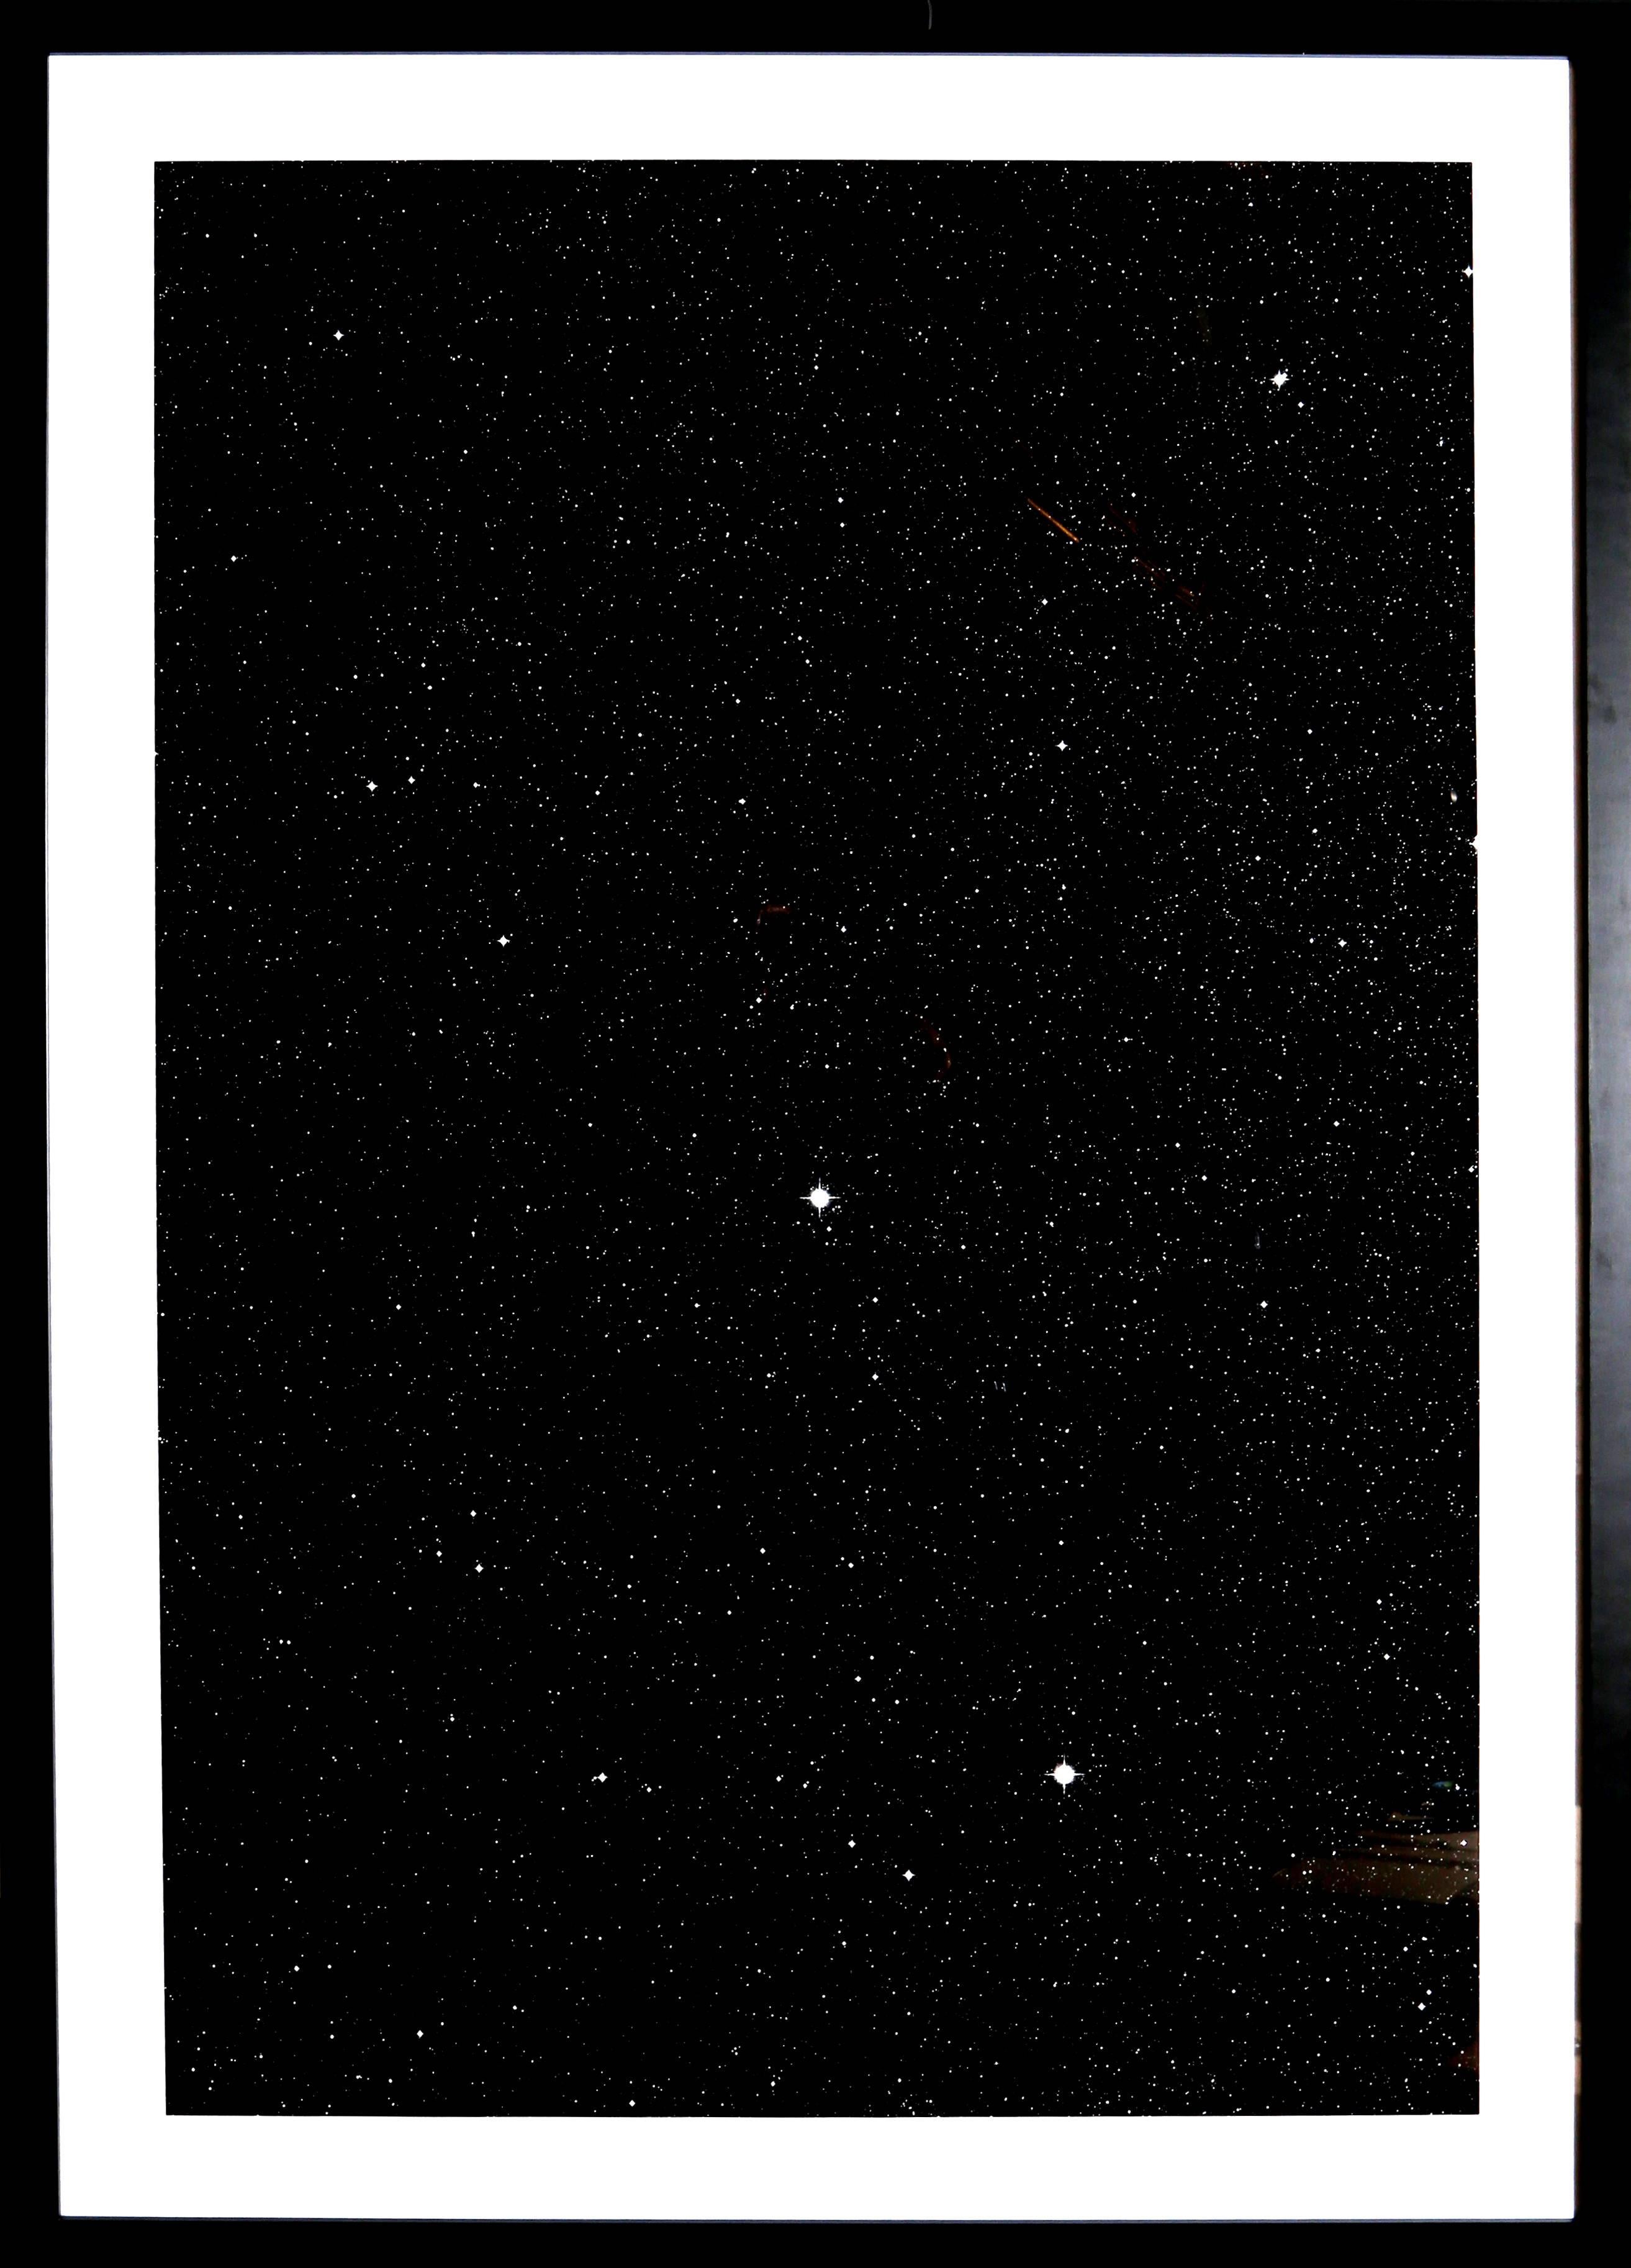 Thomas Ruff Black and White Photograph - Star 16h08m / 25 degrees